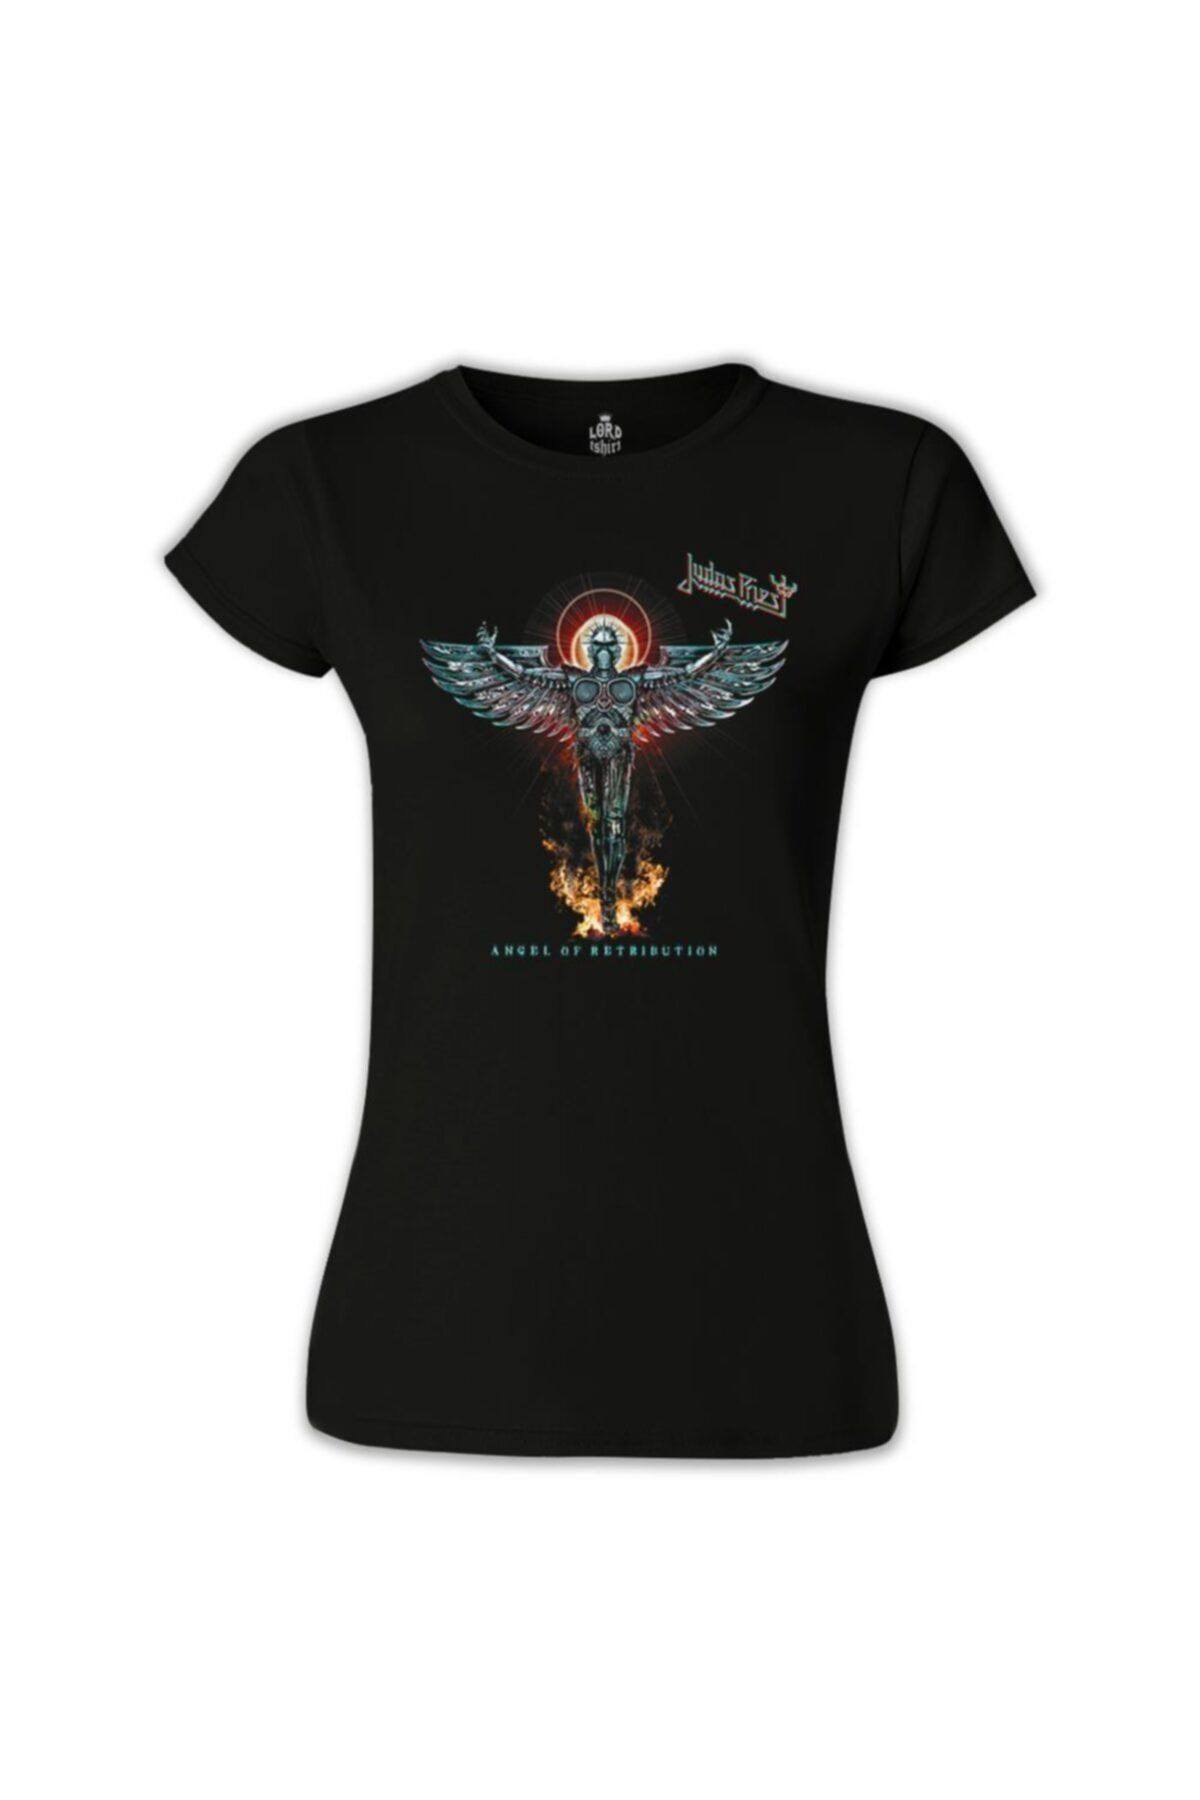 Lord T-Shirt Judas Priest - Angel Siyah Bayan Tshirt